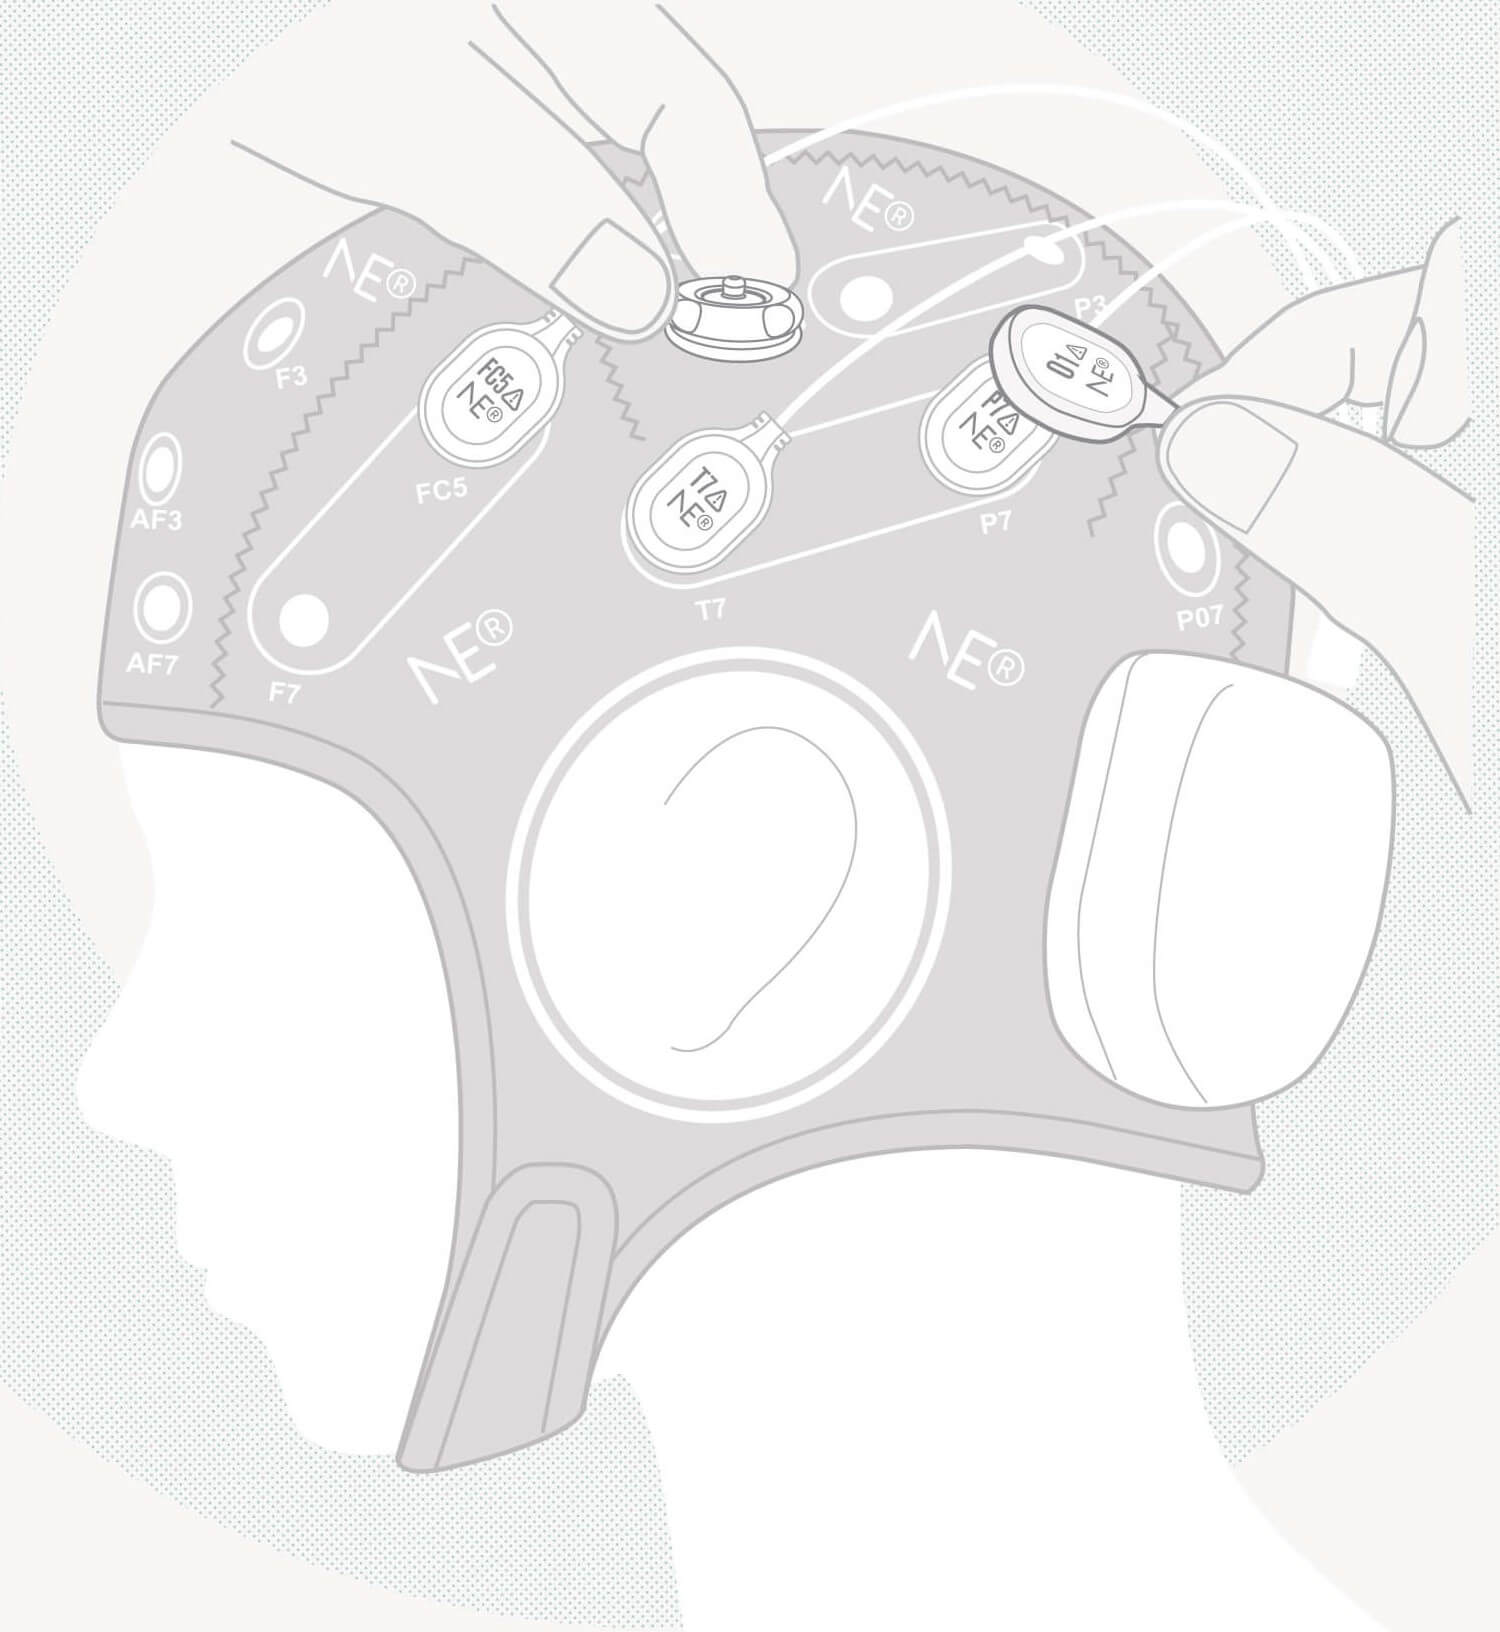 tACS Archives - Neuroelectrics Neuroelectrics Blog - Latest news about EEG  & Brain Stimulation Neuroscince